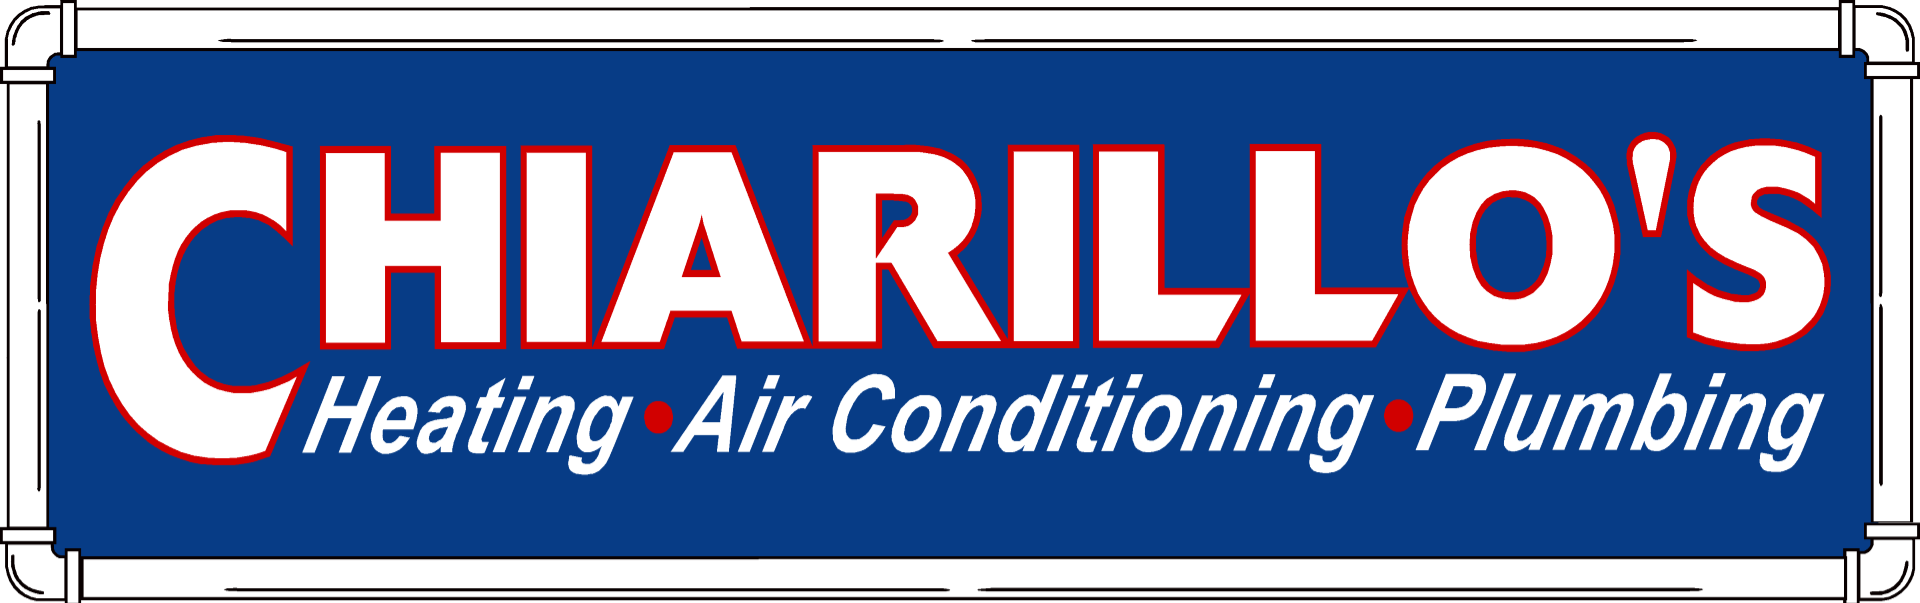 Chiarillo's Heating, Air Conditioning & Plumbing